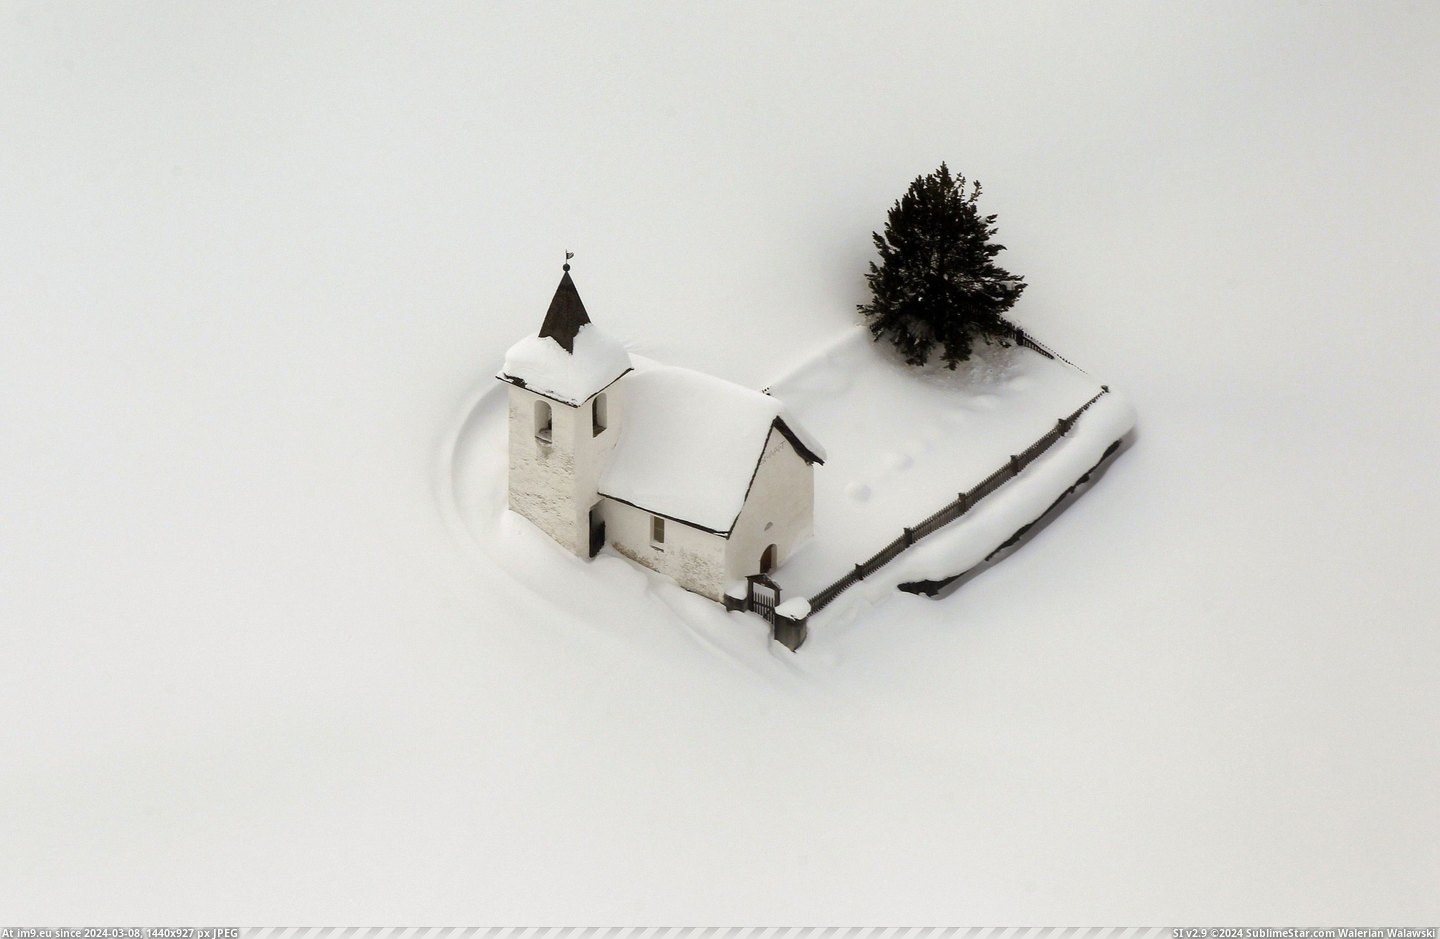 #Snow #Church #Jenisberg #Switzerland #Surrounded [Pics] A little church in Jenisberg, Switzerland, surrounded by snow. Pic. (Изображение из альбом My r/PICS favs))